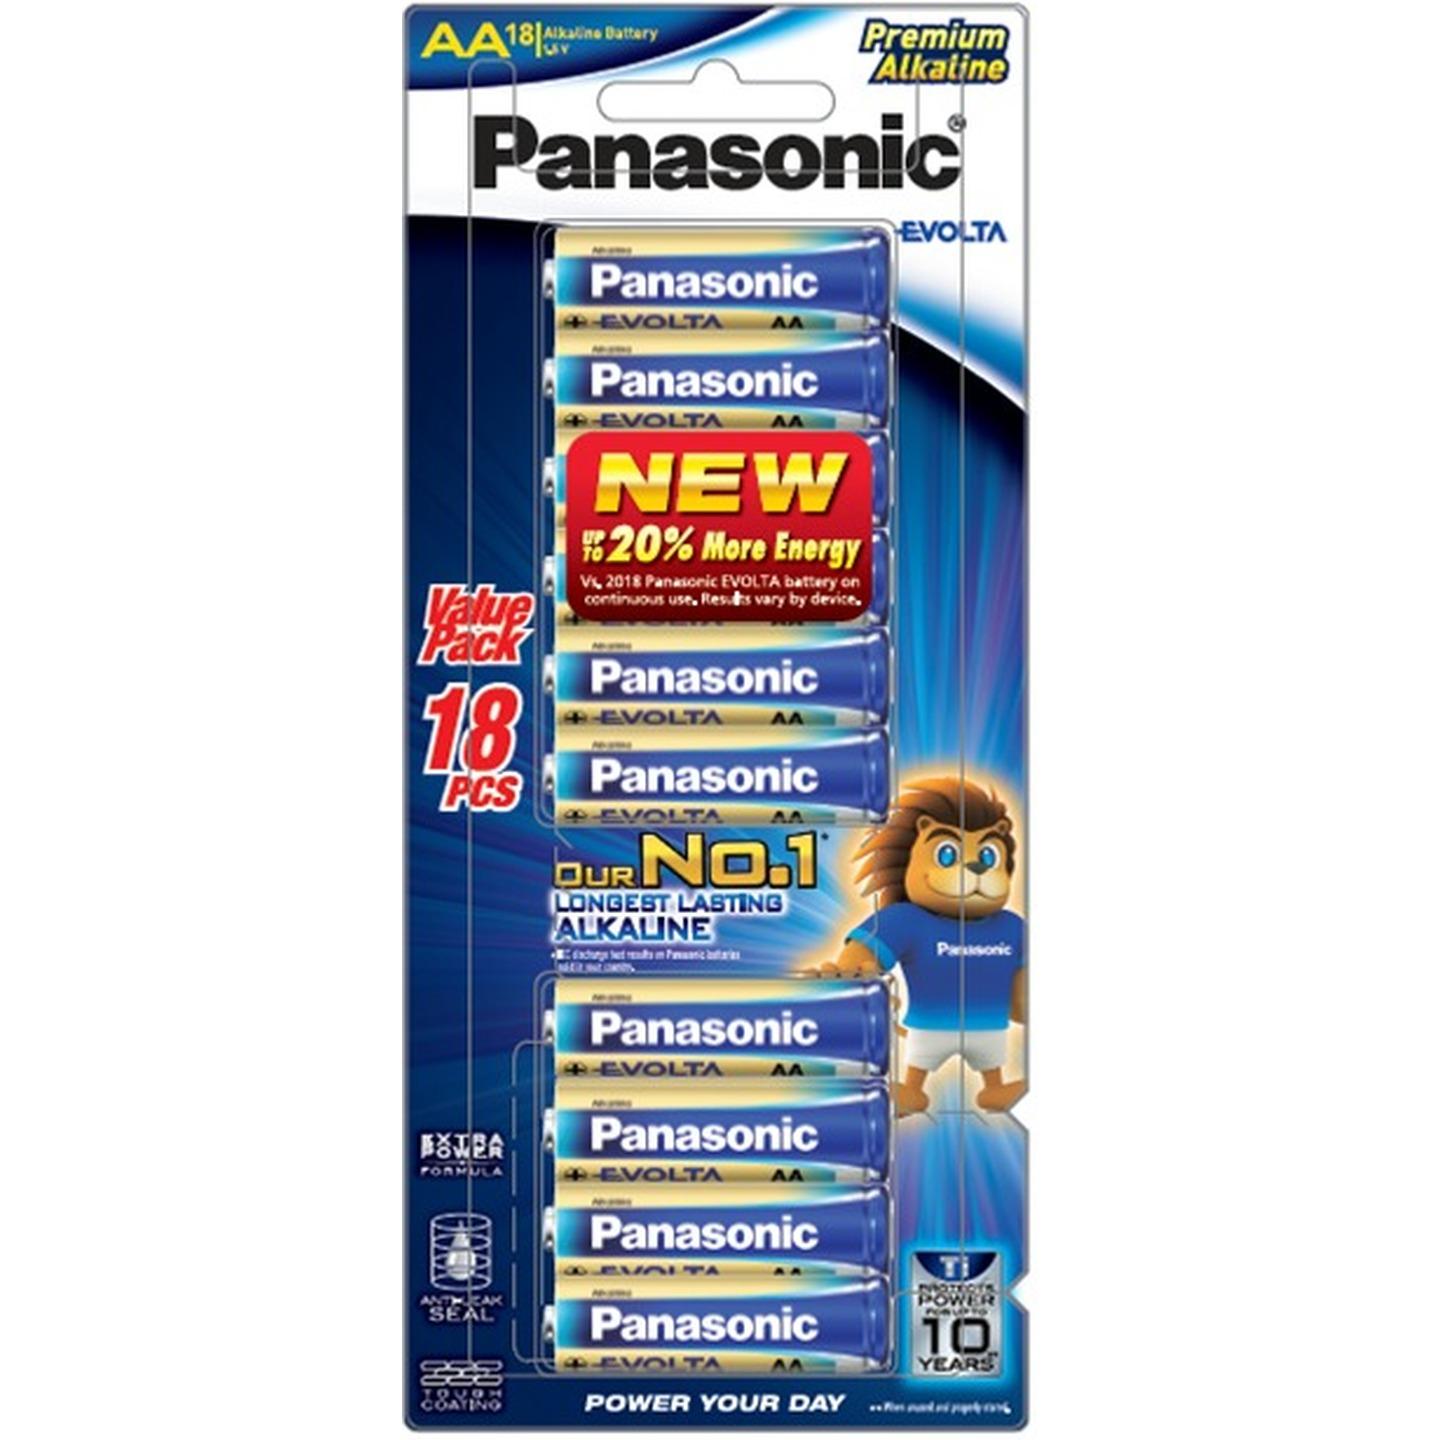 Panasonic Evolta AA Batteries - 18 Pack